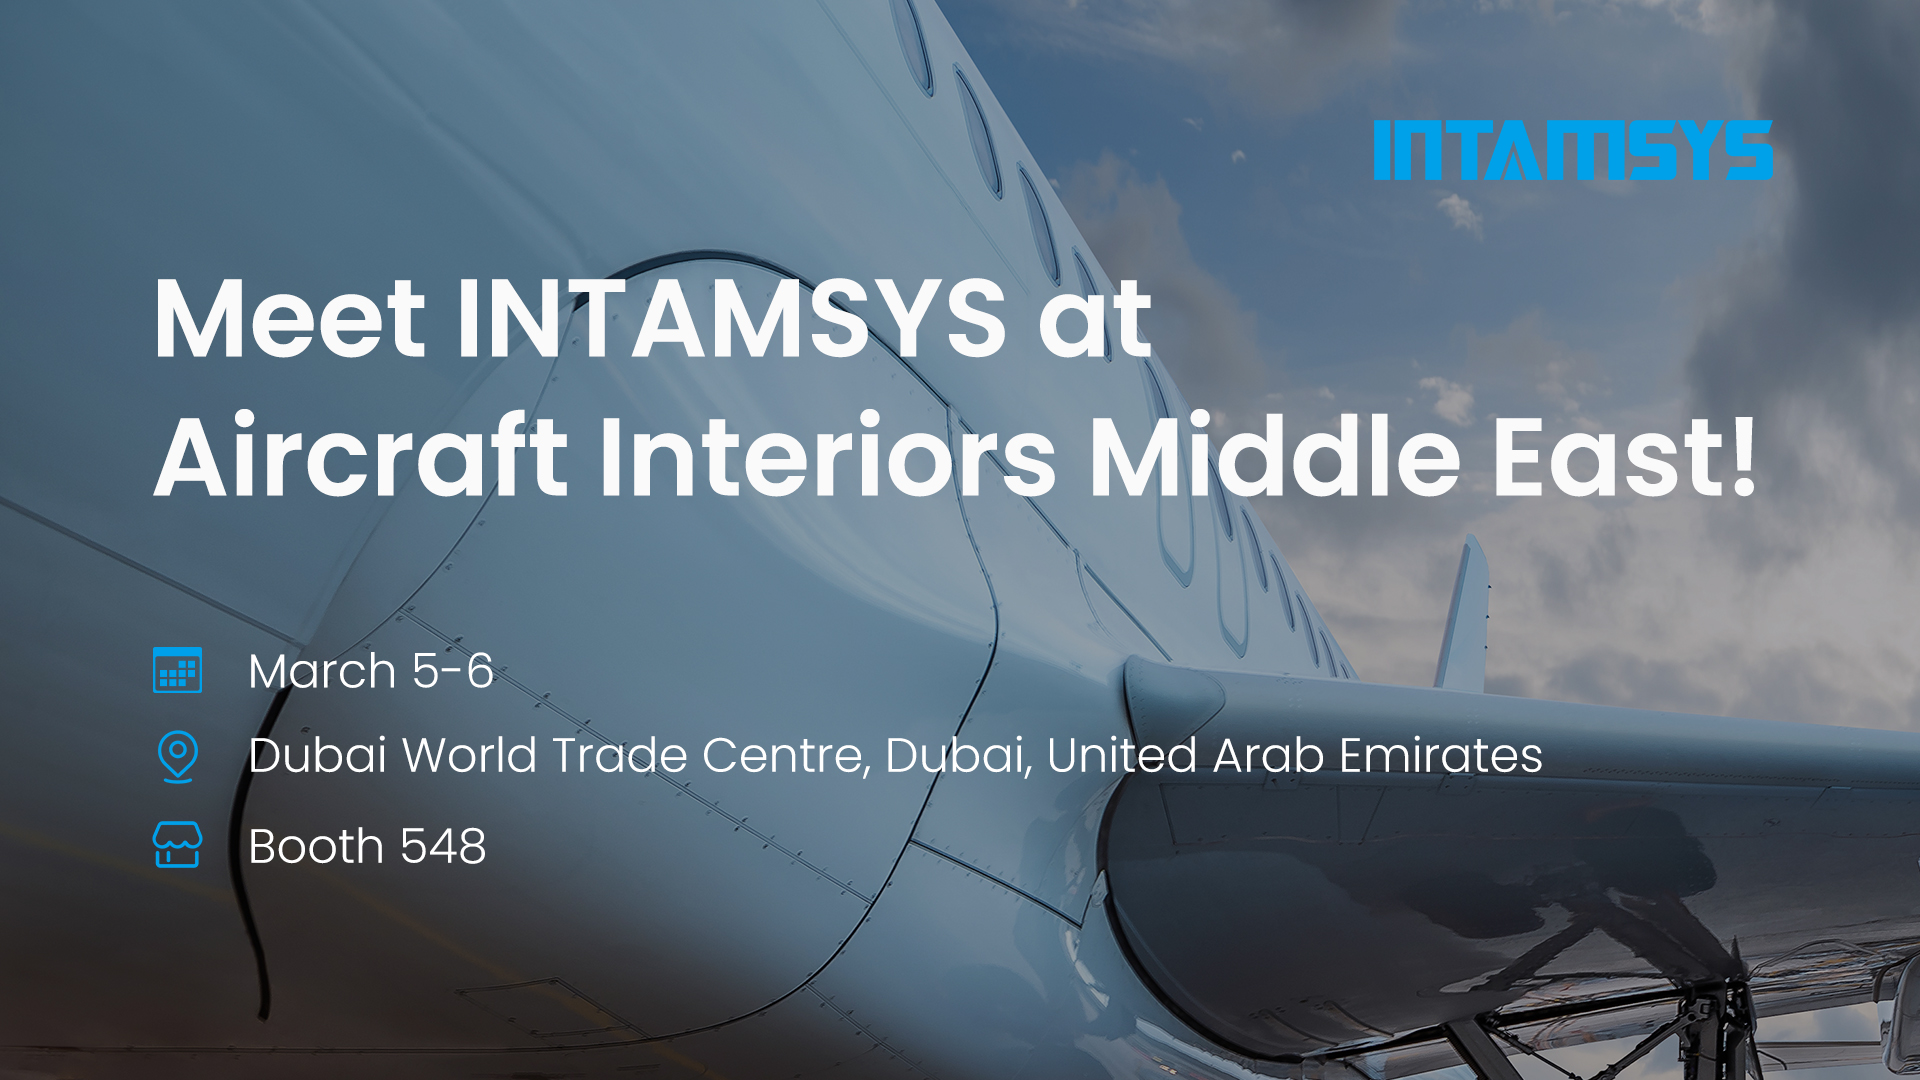 INTAMSYS Brings Its 3D Printing Solutions into the Aircraft Interiors World